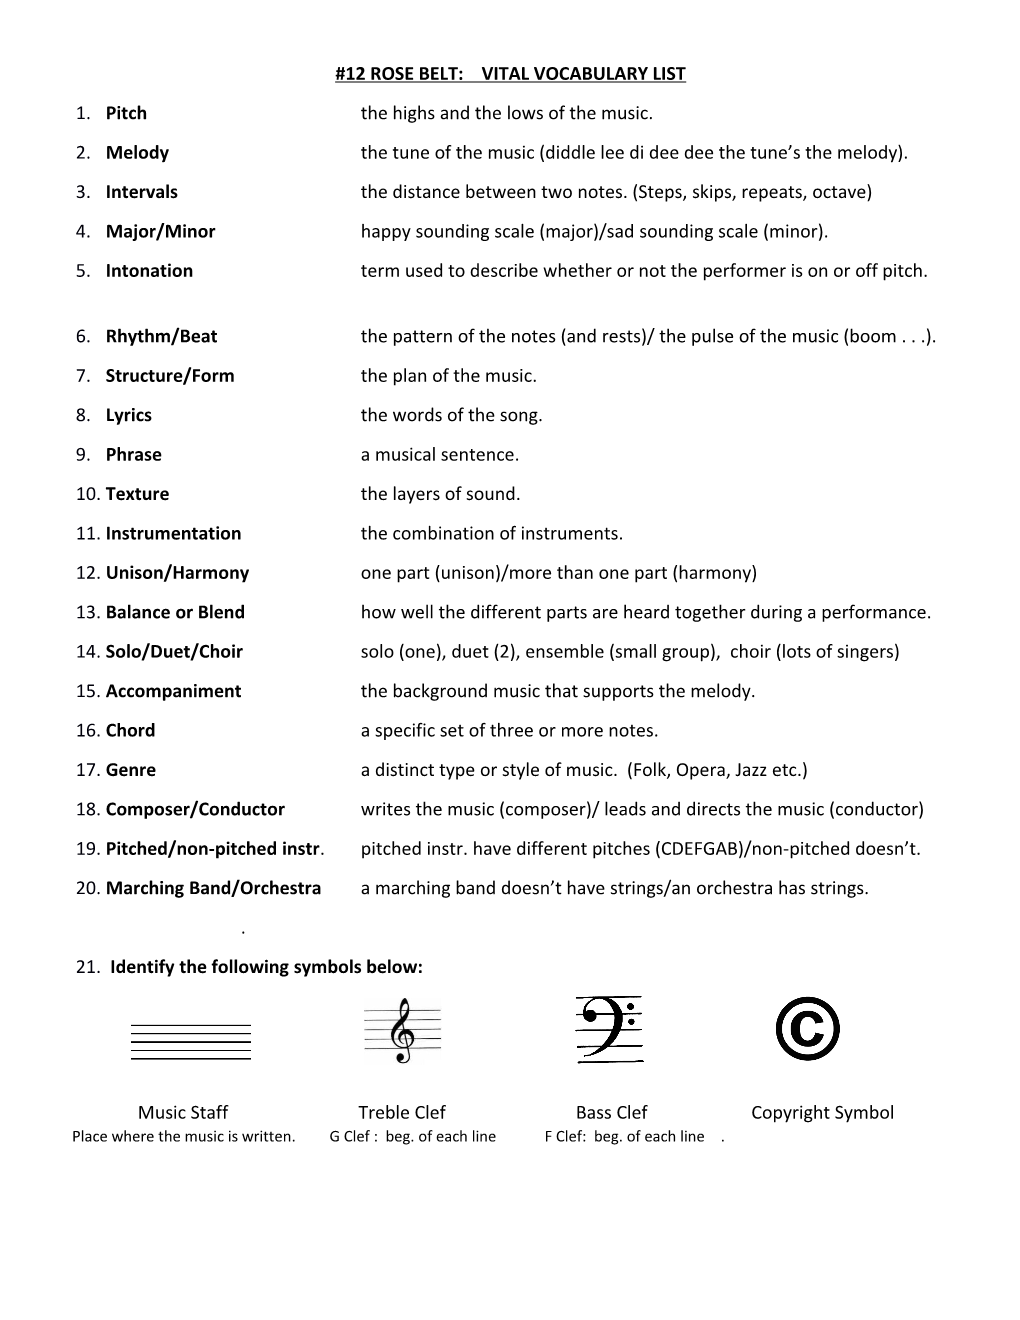 12Rosebelt: Vital Vocabulary List